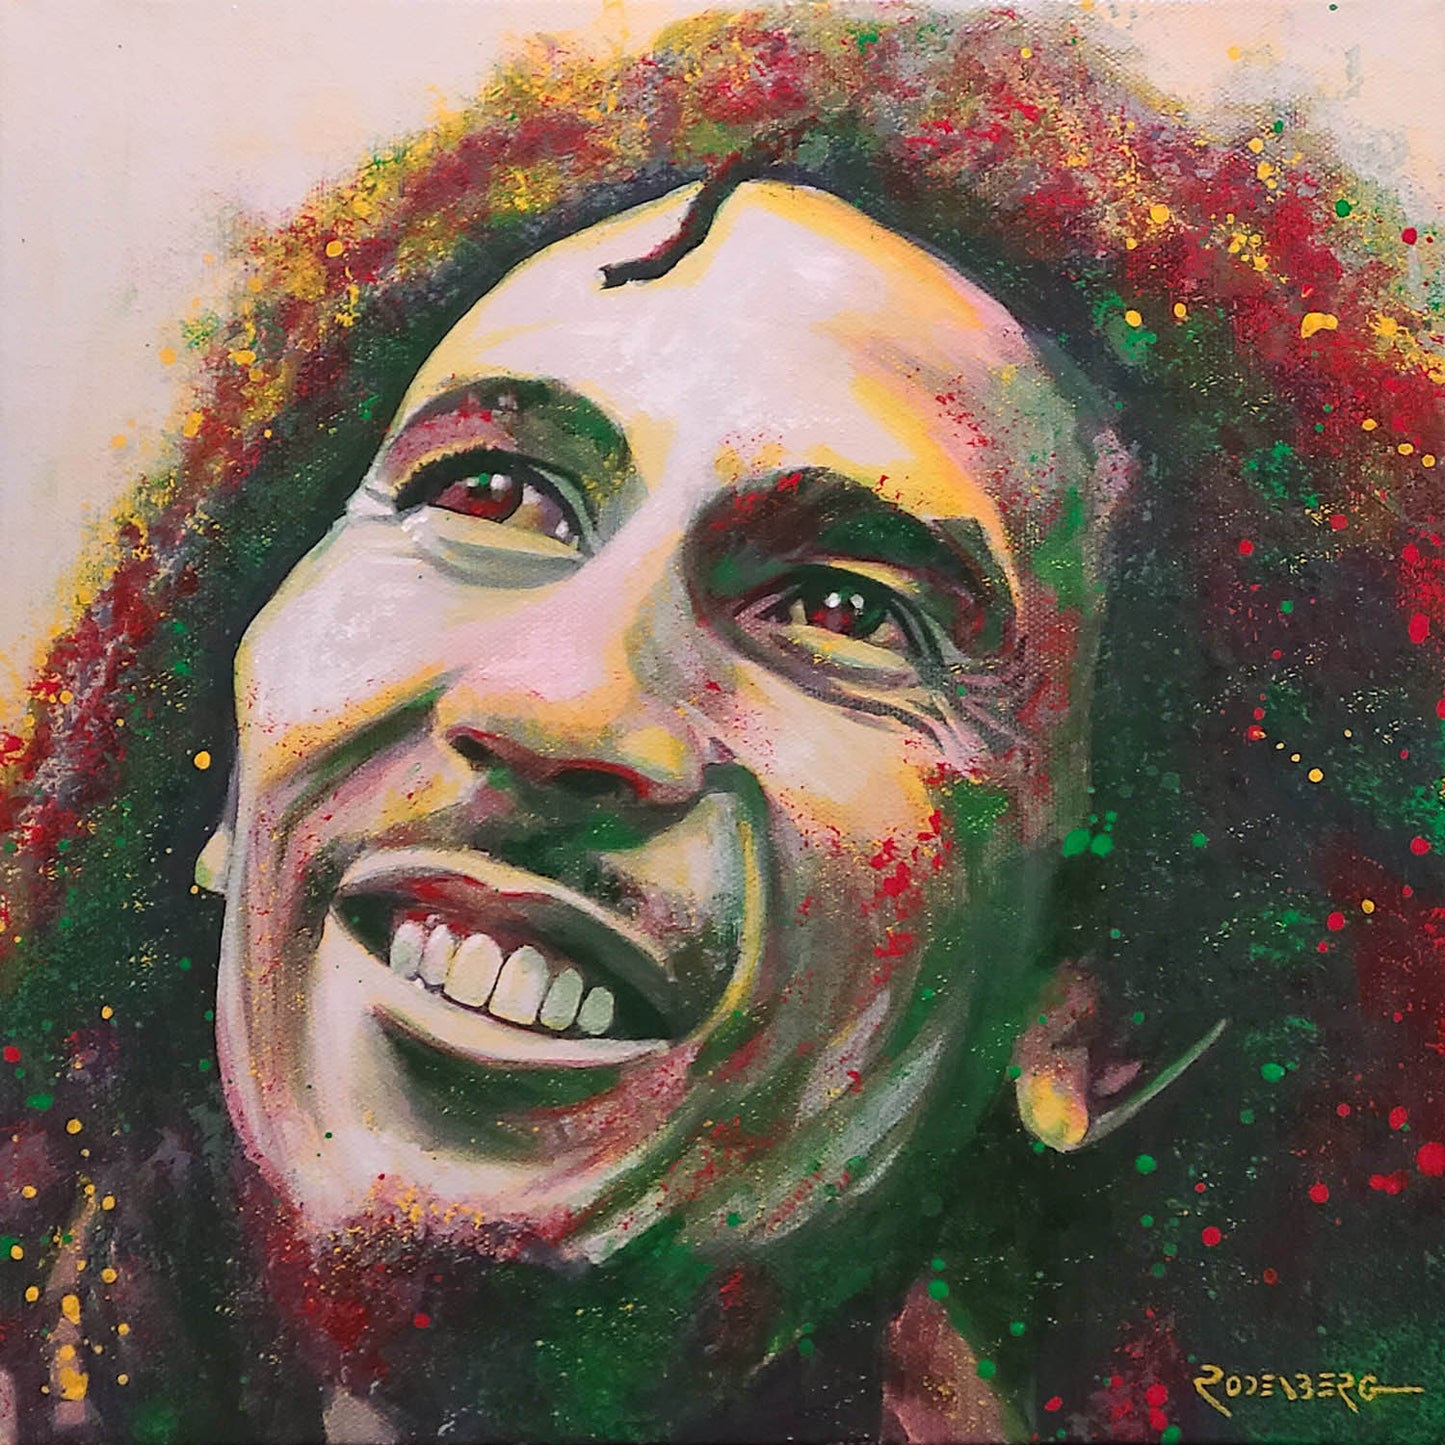  Bob Marley portrait painting art by Jeff Rodenberg